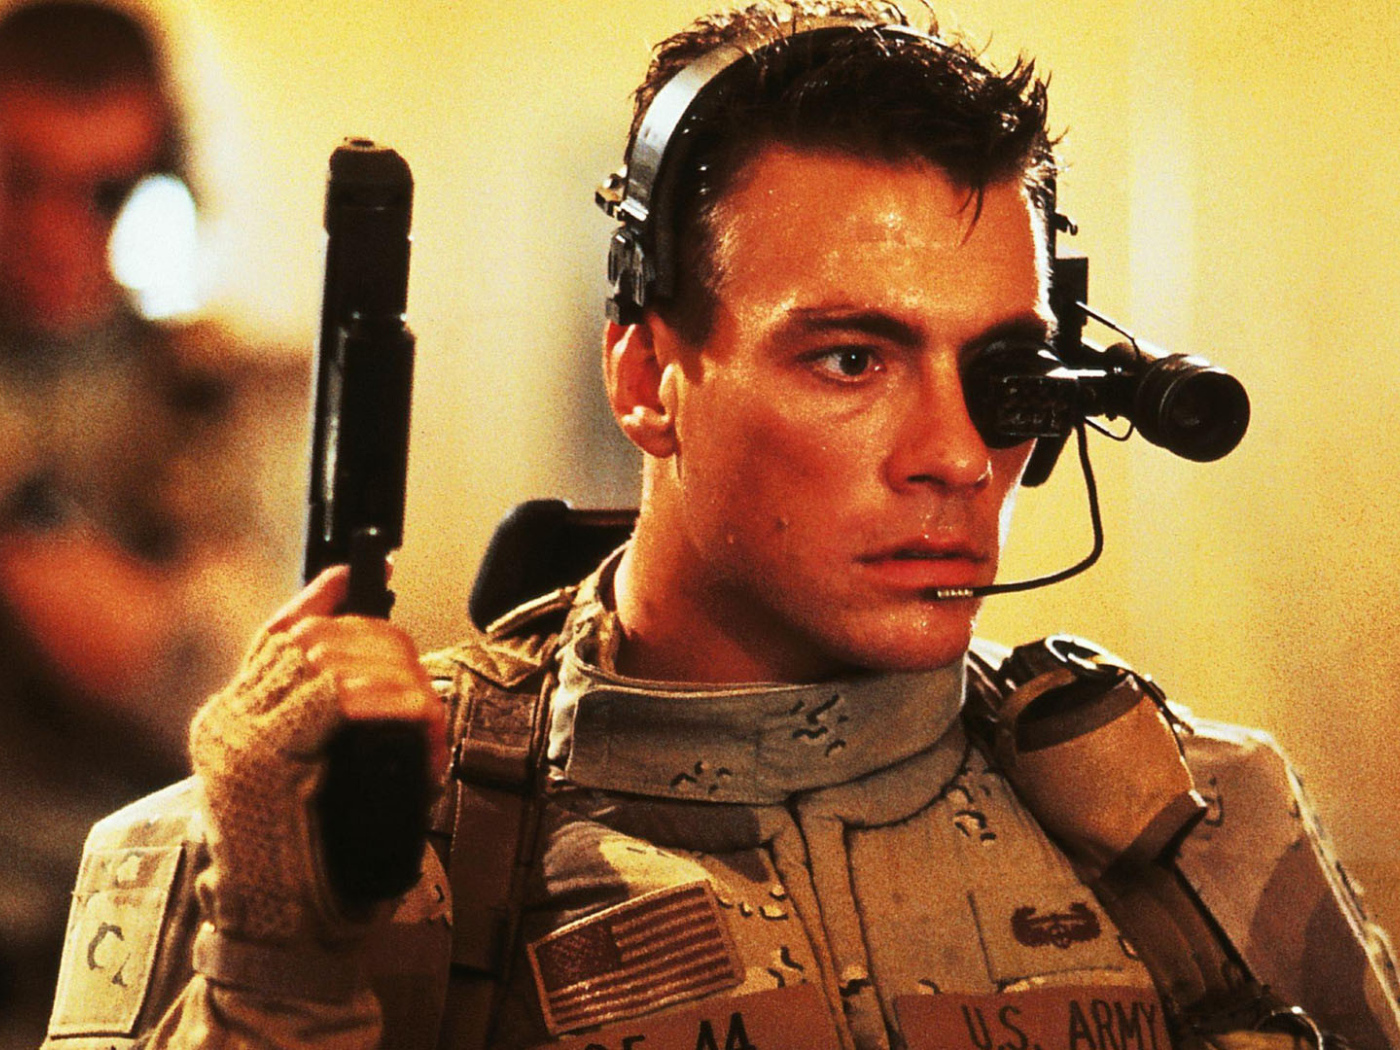 Hollywood Movie star Jean-Claude Van Damme as universal soldier